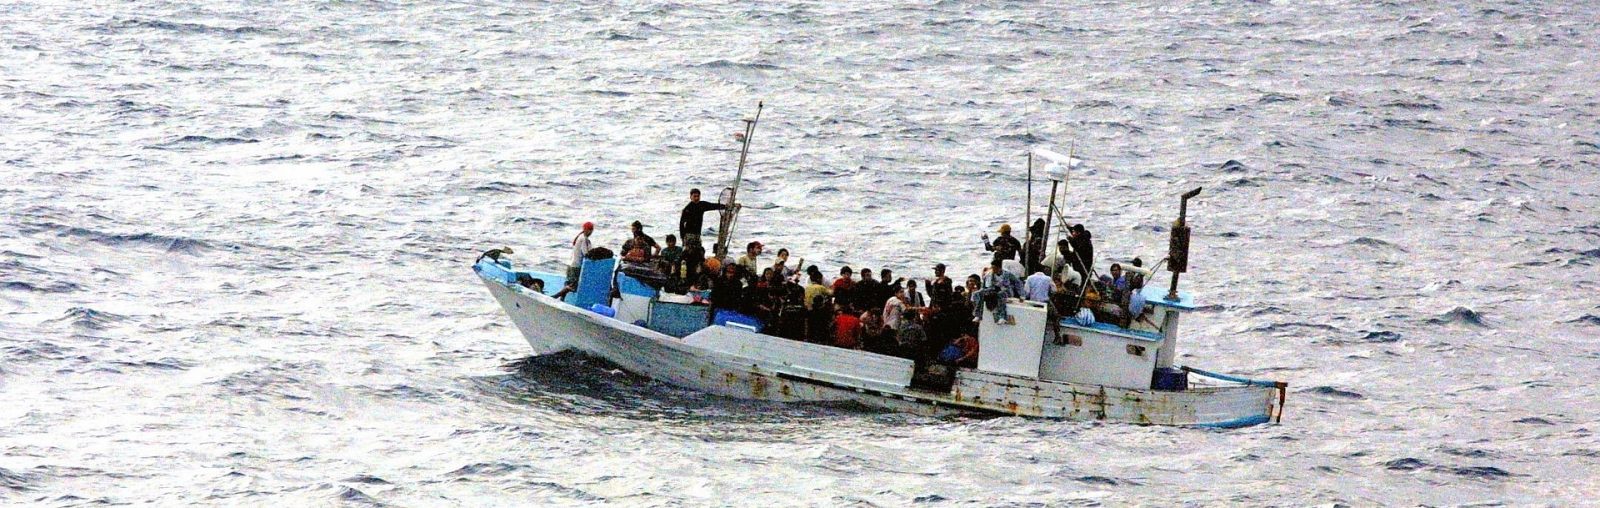 Беженцы уезжают на лодке